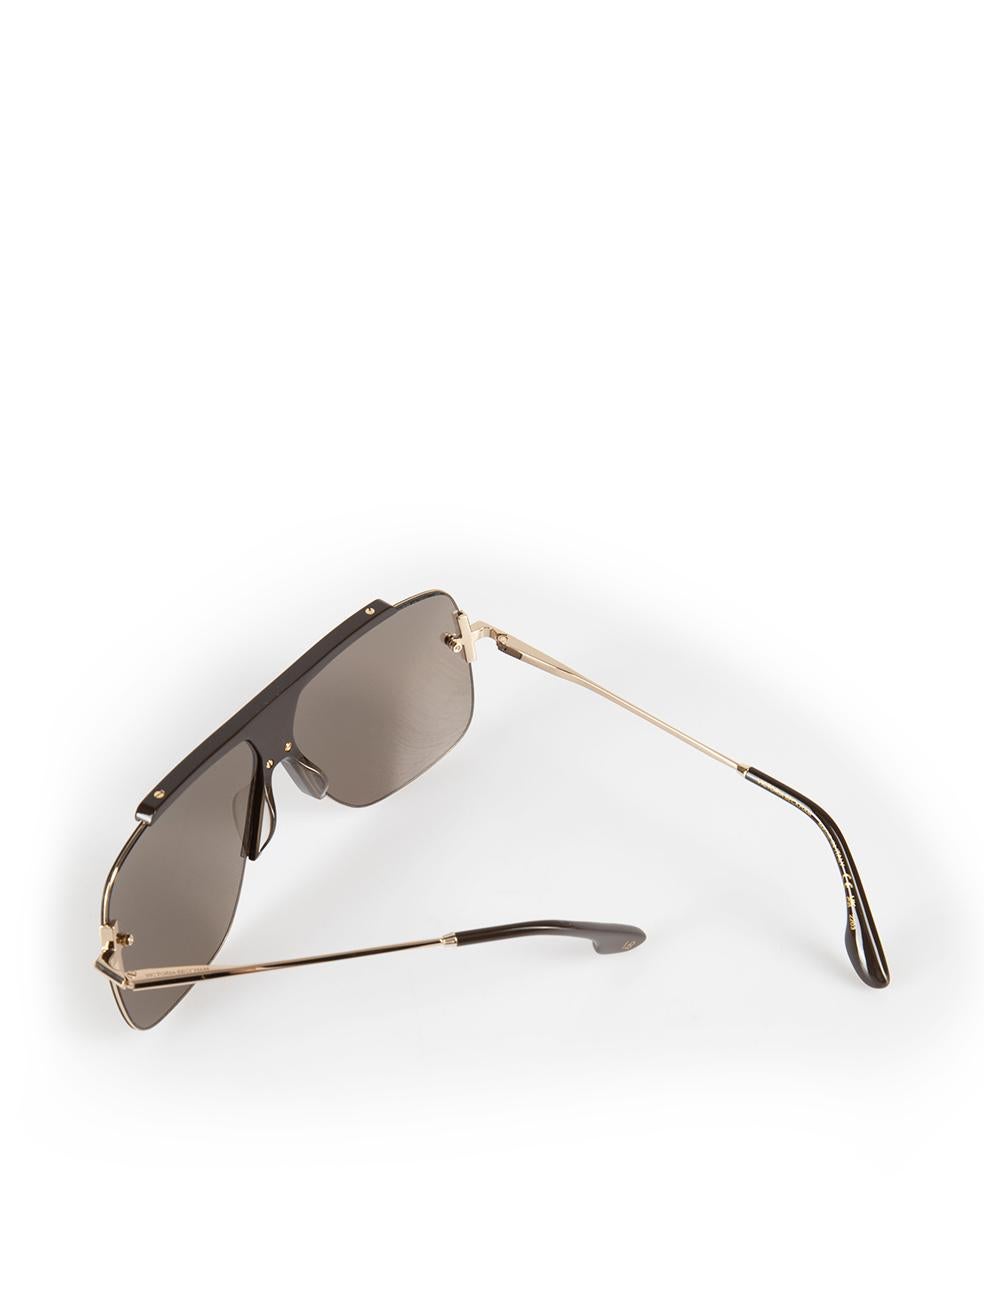 Victoria Beckham Mocha Navigator Frame Sunglasses For Sale 3